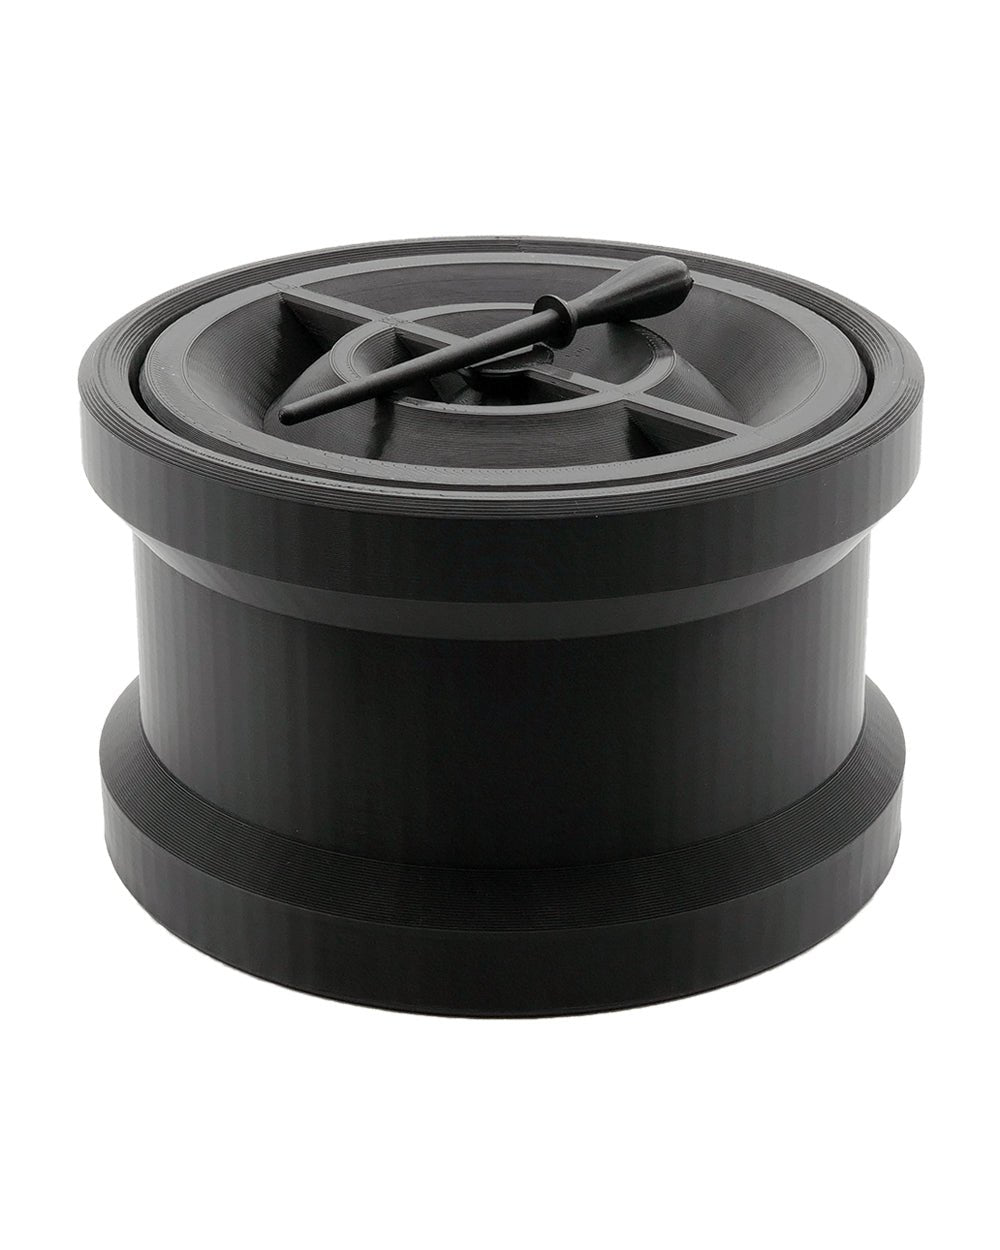 HUMBOLDT | Black Pre-Rolled Cones Filling Machine Starter Kit 84mm | Fill 121 Cones Per Run - 2